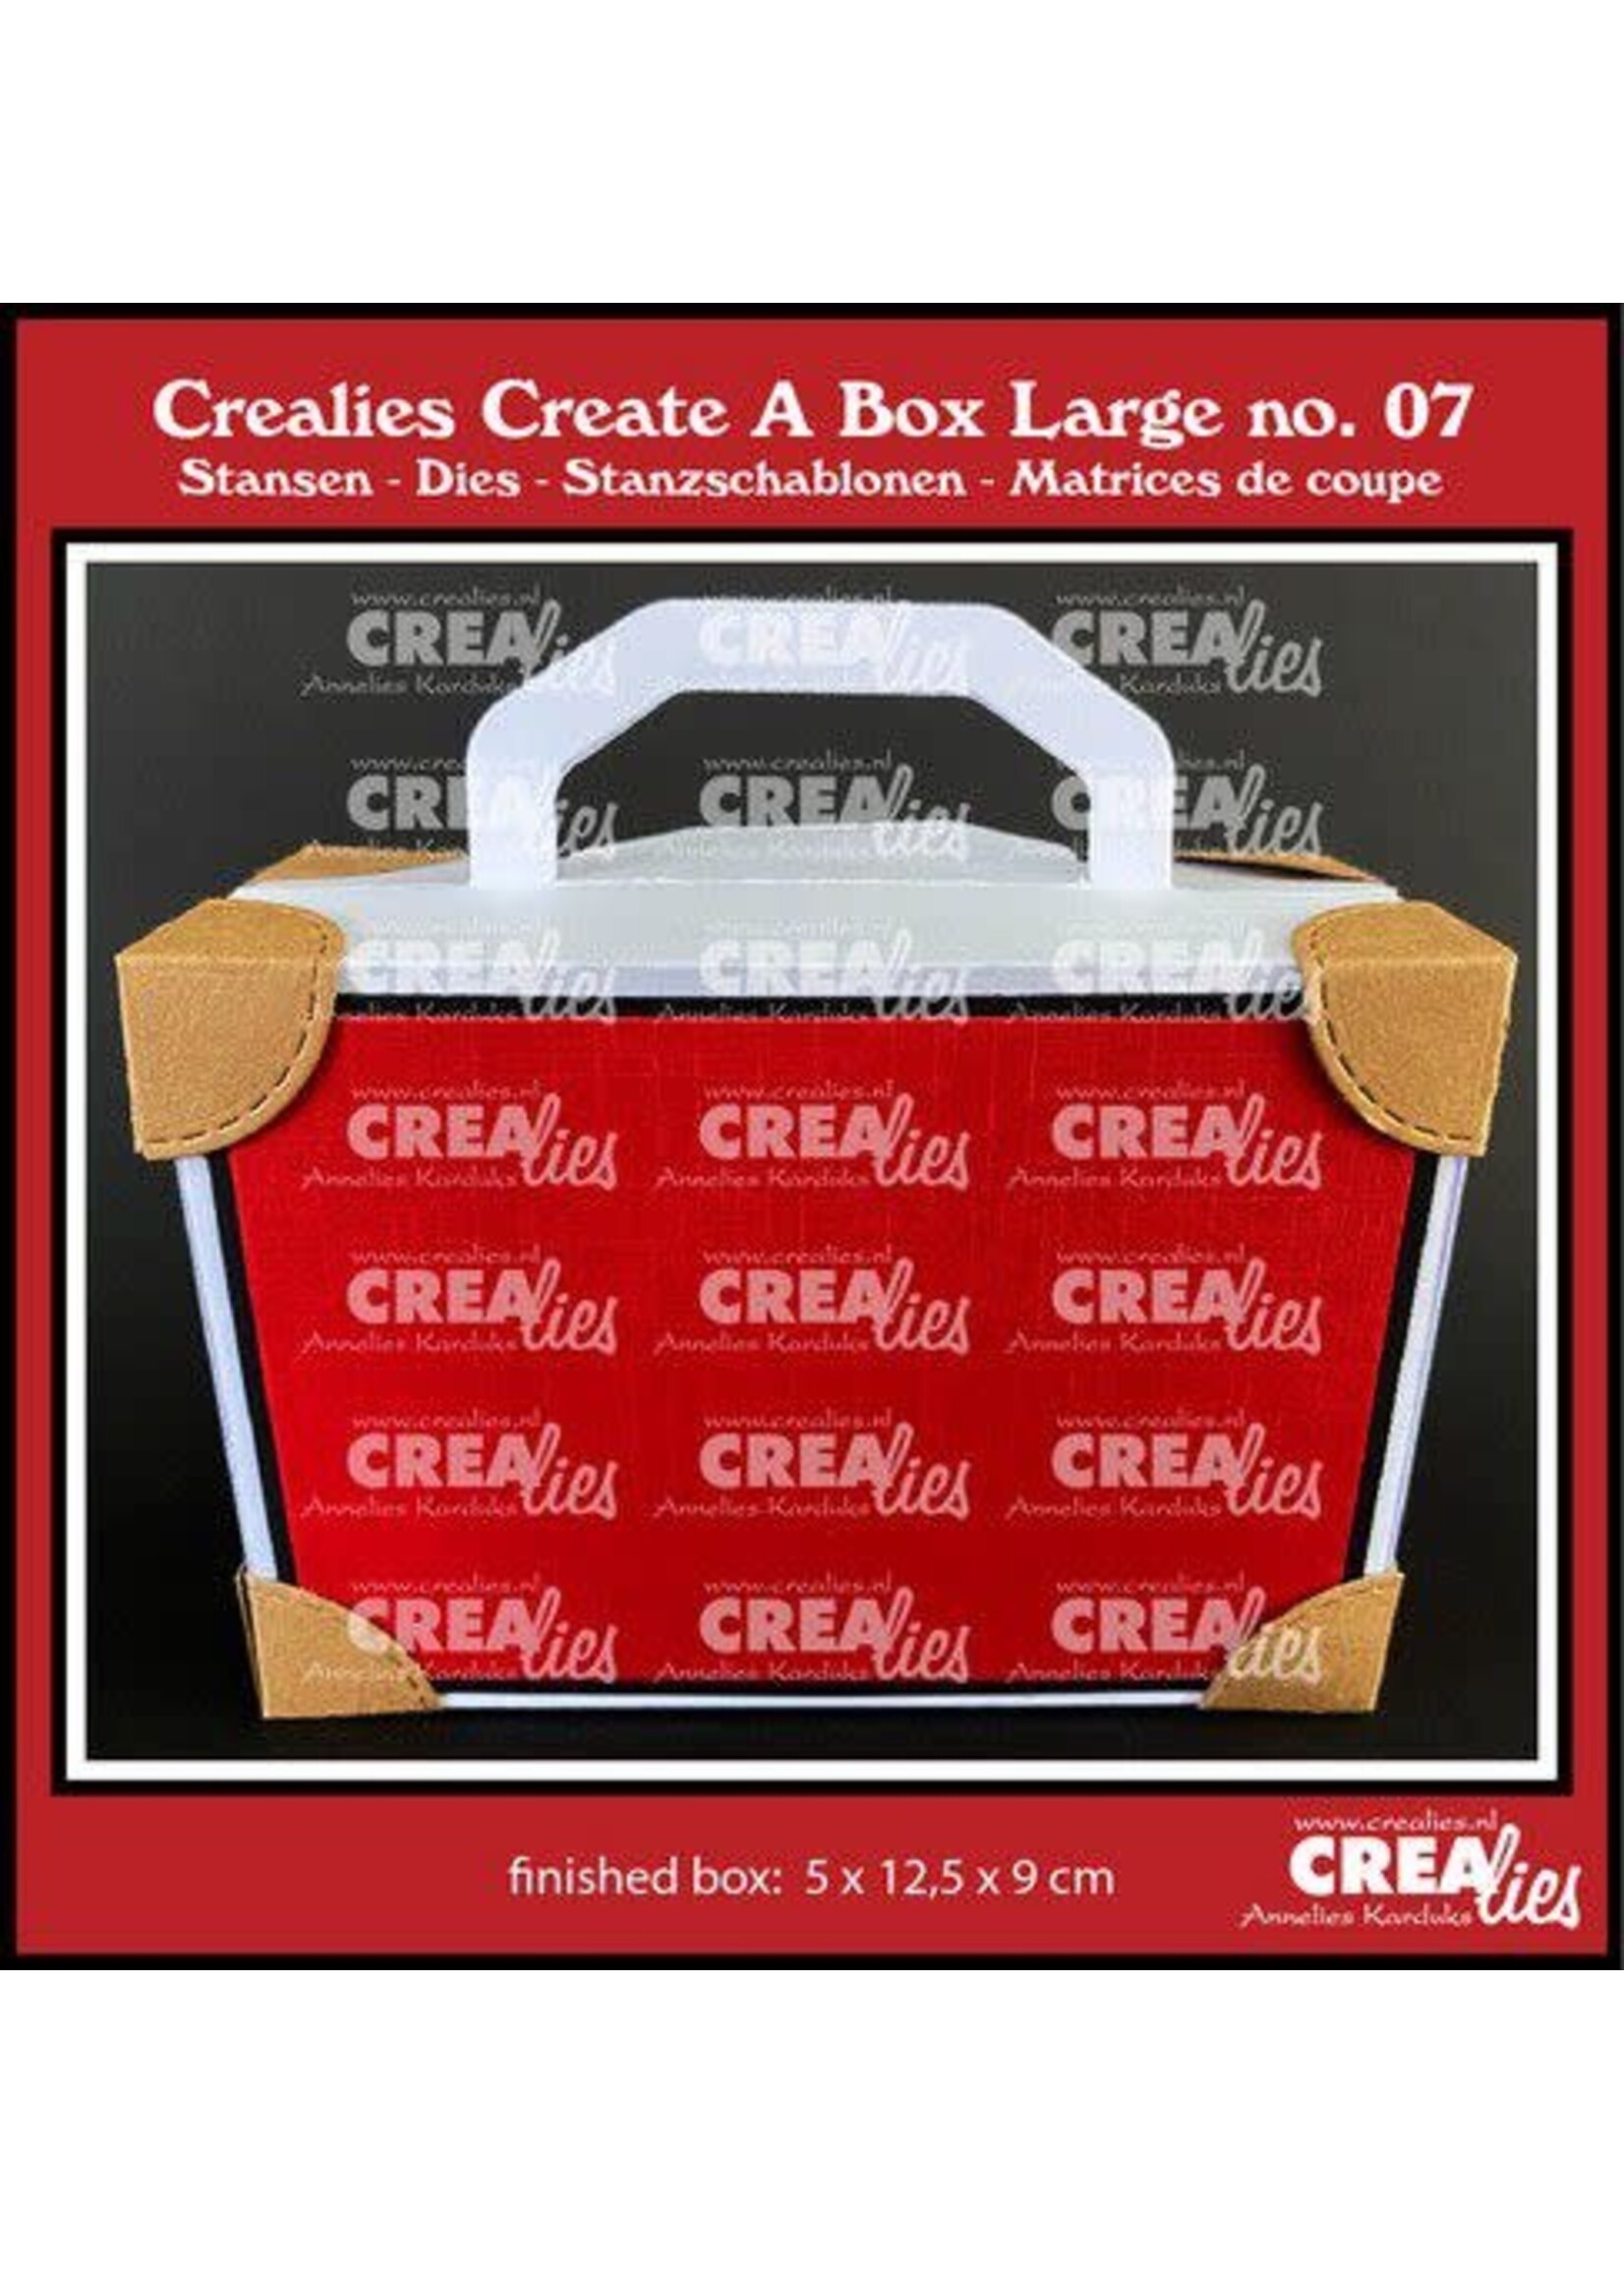 Crealies Crealies Create A Box Large Koffer groot CCABL07 finished: 5x12,5x9 cm (06-23) Artikelnummer 115634/2407